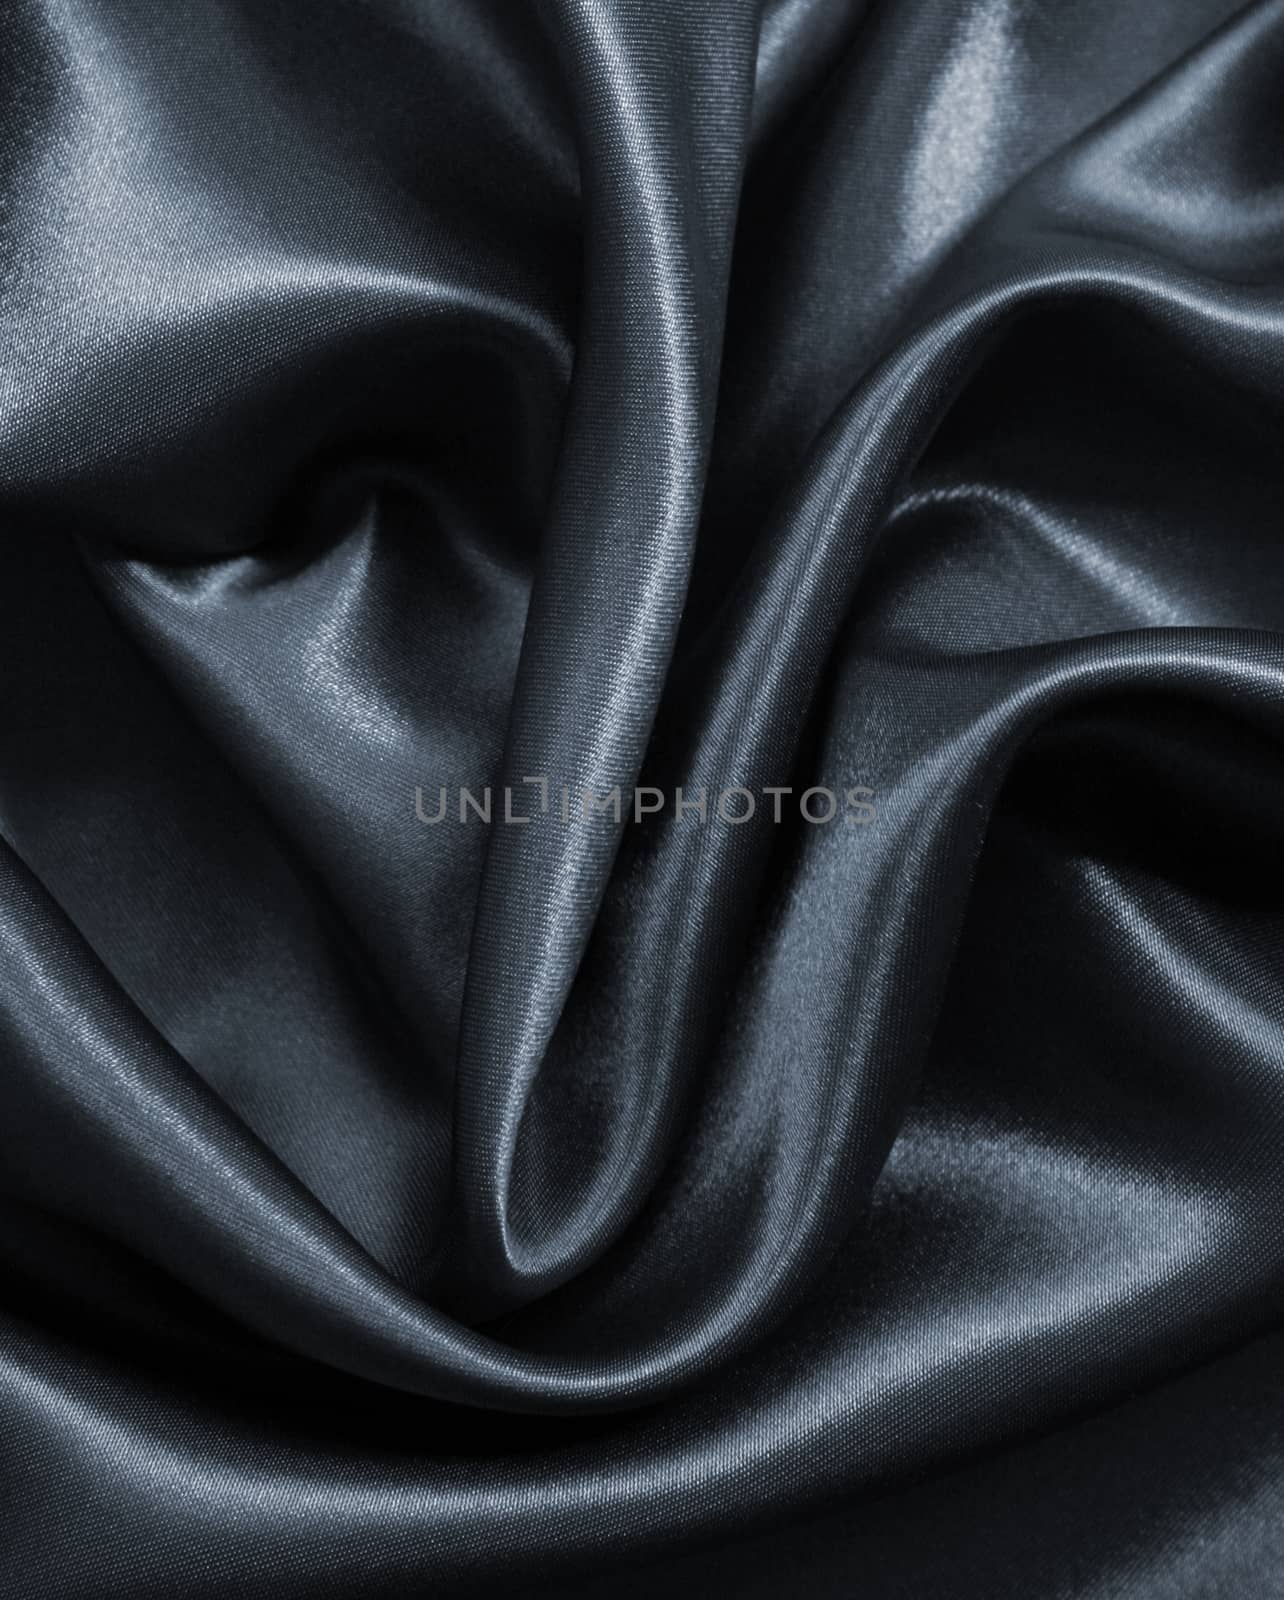 Smooth elegant dark grey silk or satin can use as background 